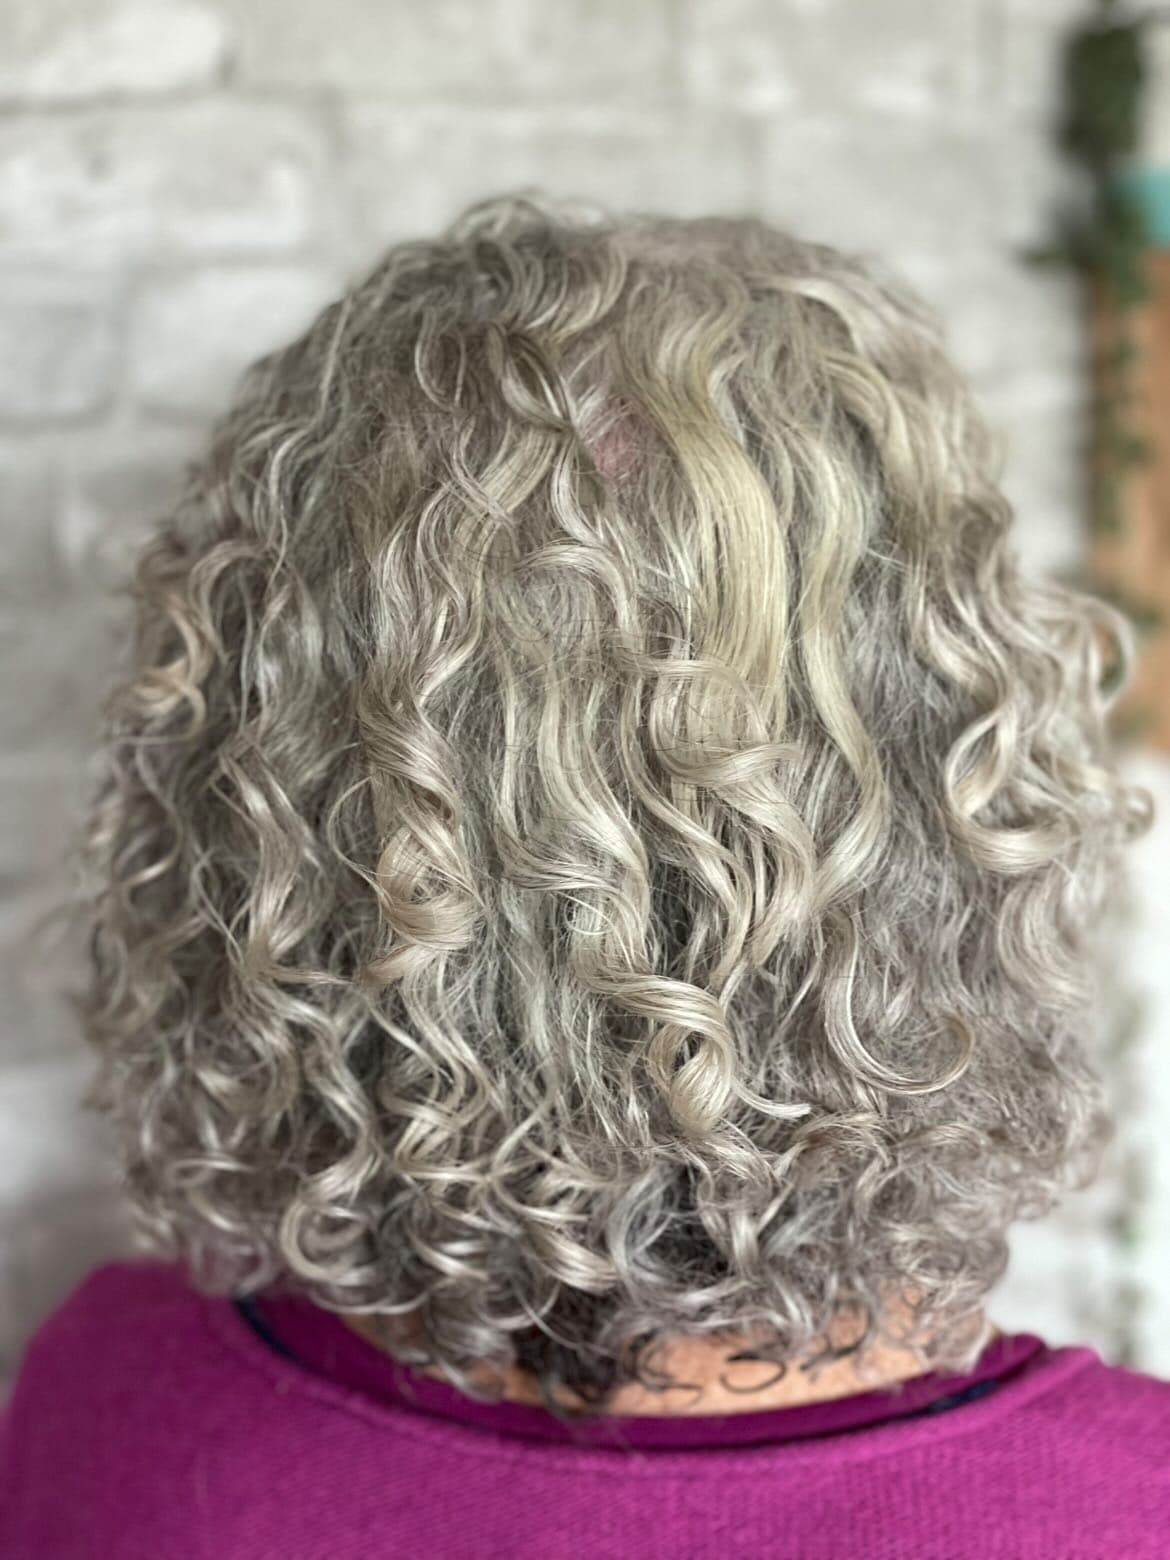 Natural silver curls  Curly silver hair  Natural grey curls  Curly grey  hair silverhairlookthatIlike  Curly silver hair Grey curly hair Gray  hair highlights